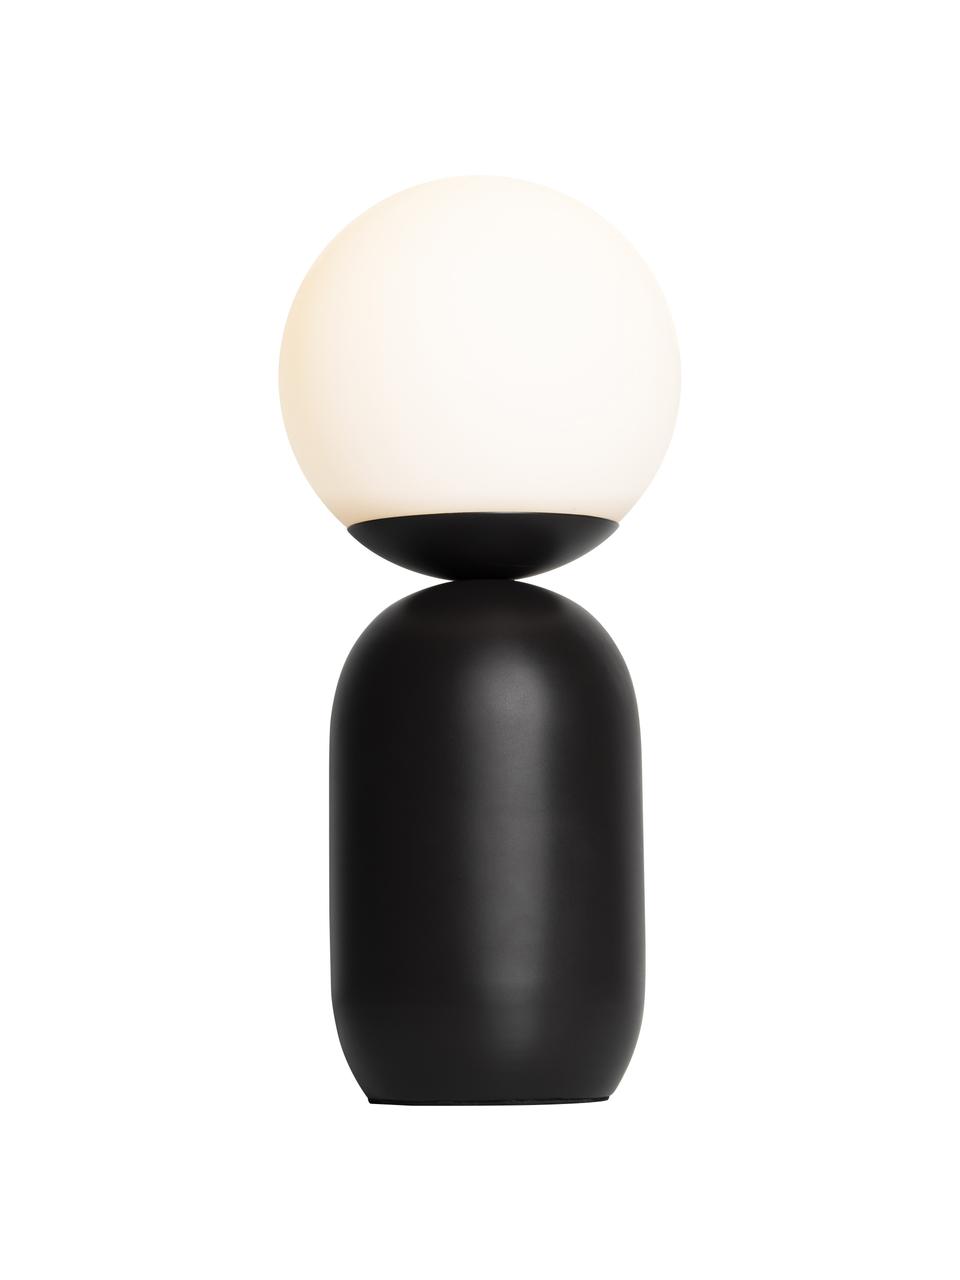 Kleine tafellamp Notti in zwart, Lampvoet: metaal, gecoat, Lampenkap: glas, moddergeblazen, Zwart, wit, Ø 15 x H 35 cm